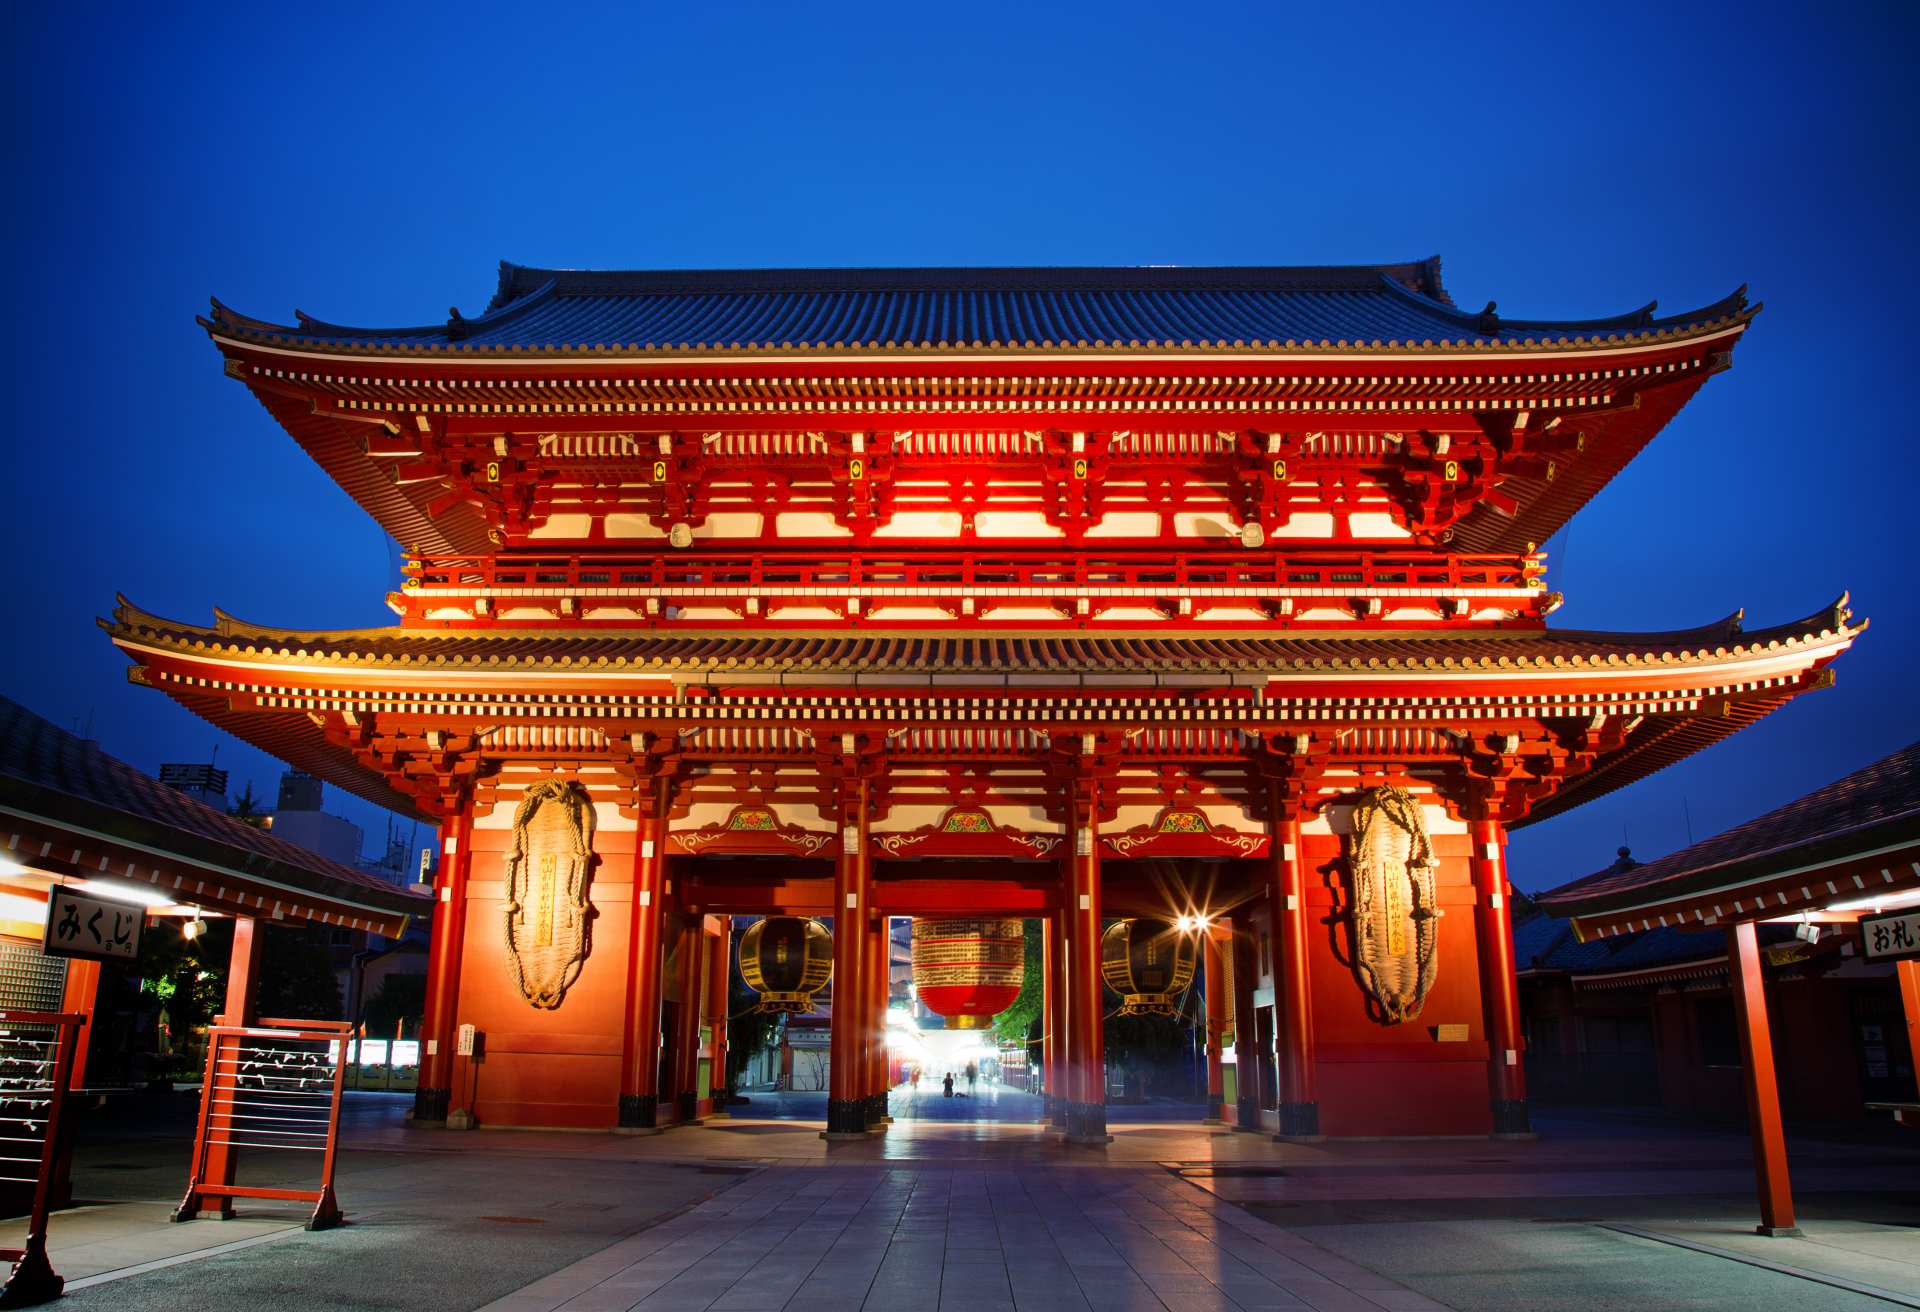 The Kaminarimon gate of the Sensoji Temple